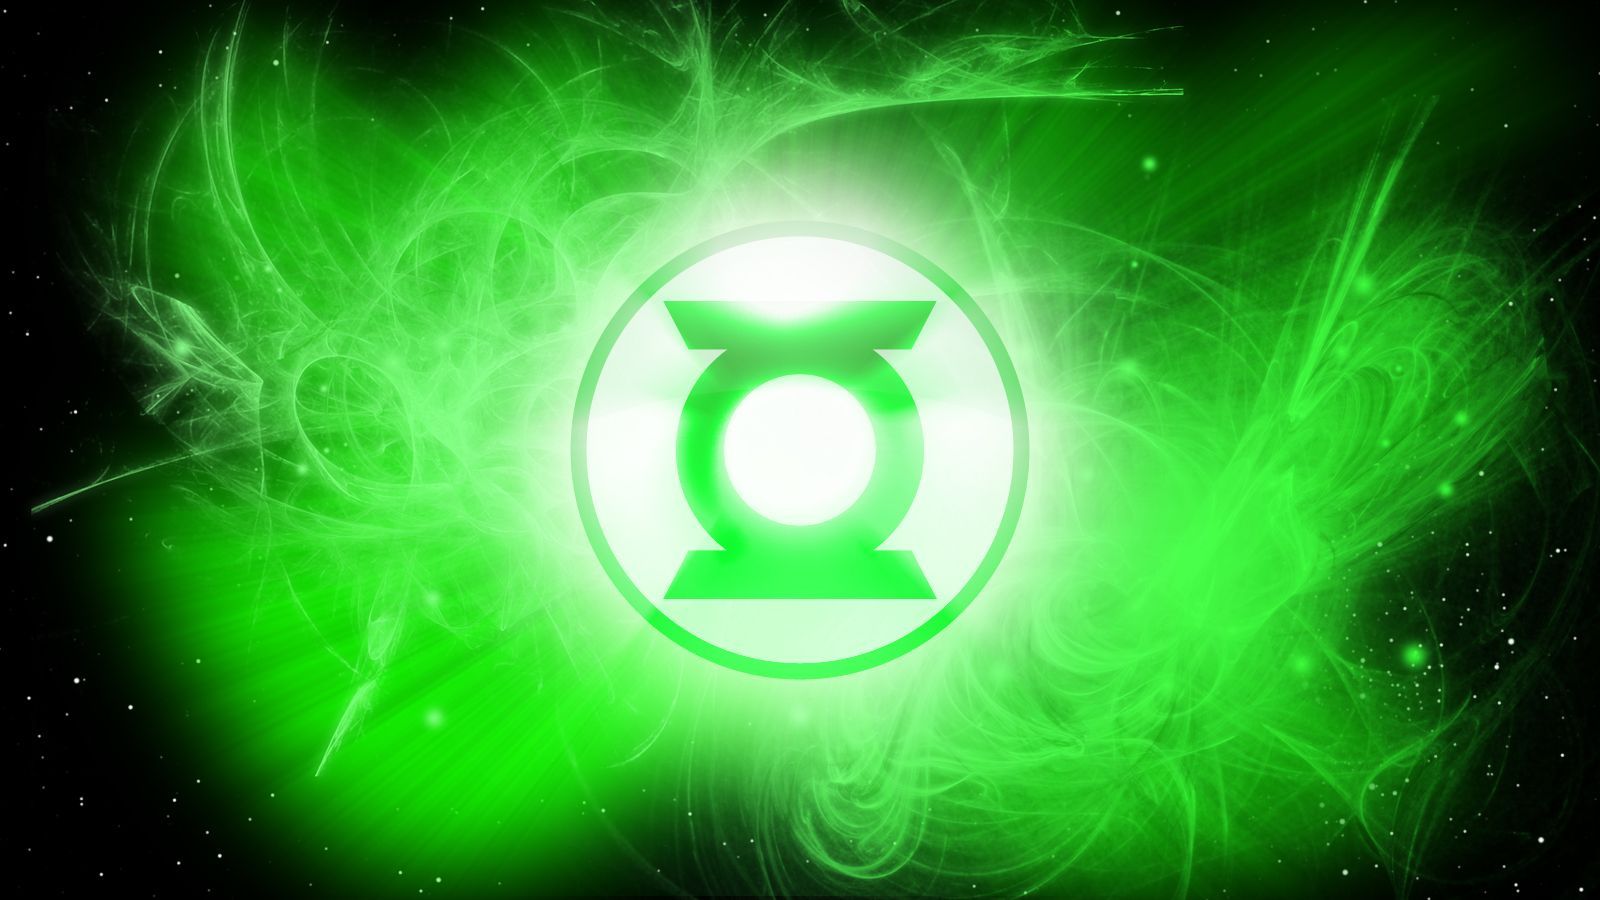 Green Lantern HD image. Green lantern wallpaper, Green lantern symbol, Green lantern corps